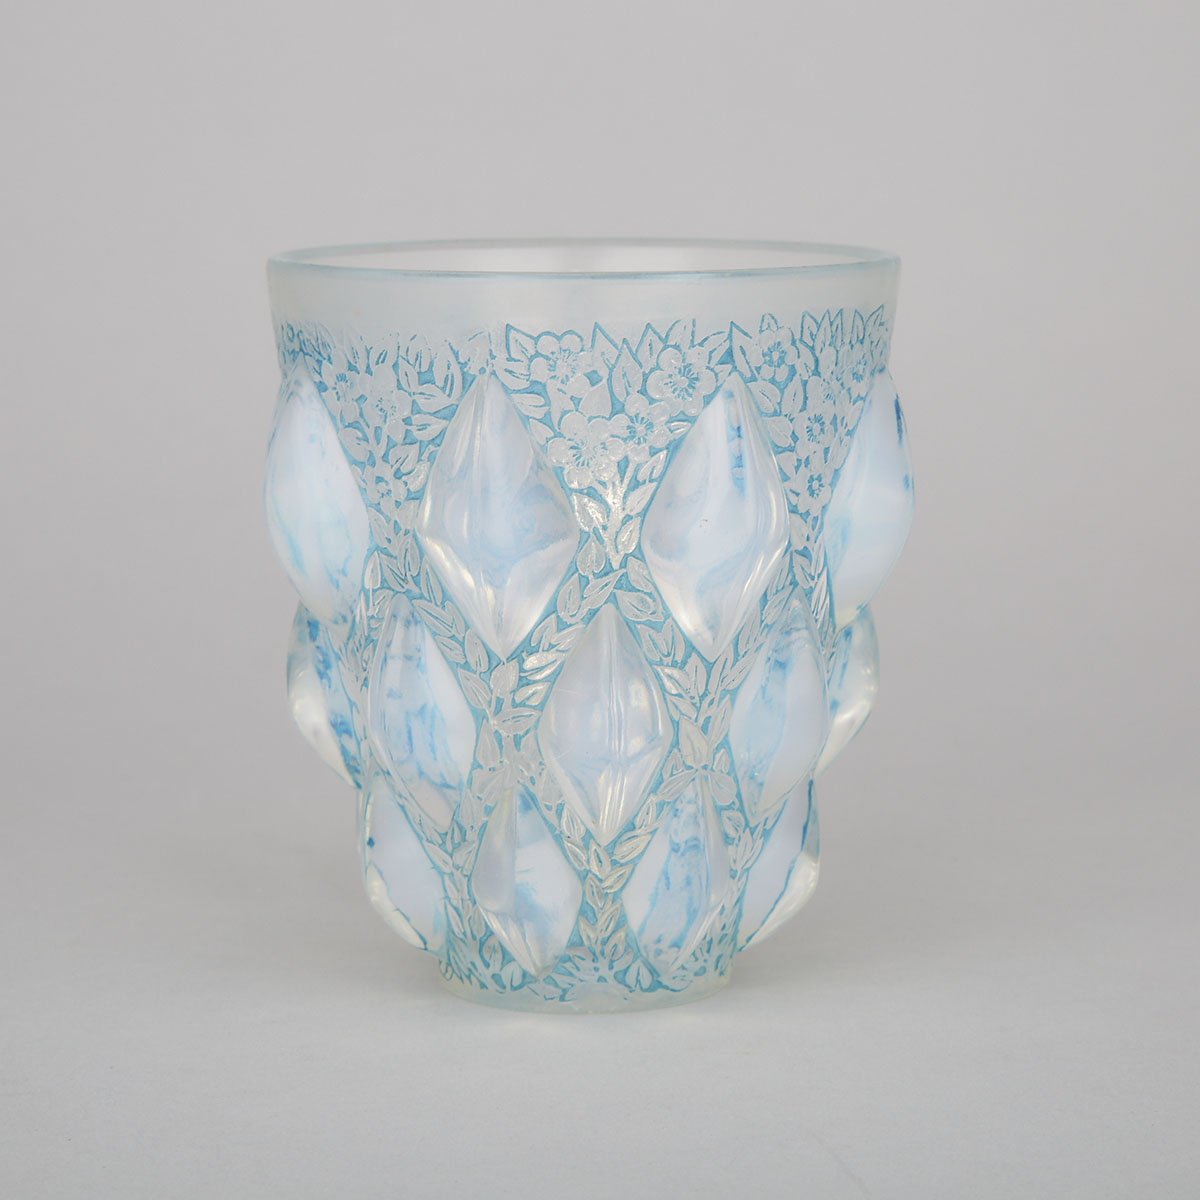 ‘Rampillon’, Lalique Blue Enameled Moulded Opalescent Glass Vase, c.1930